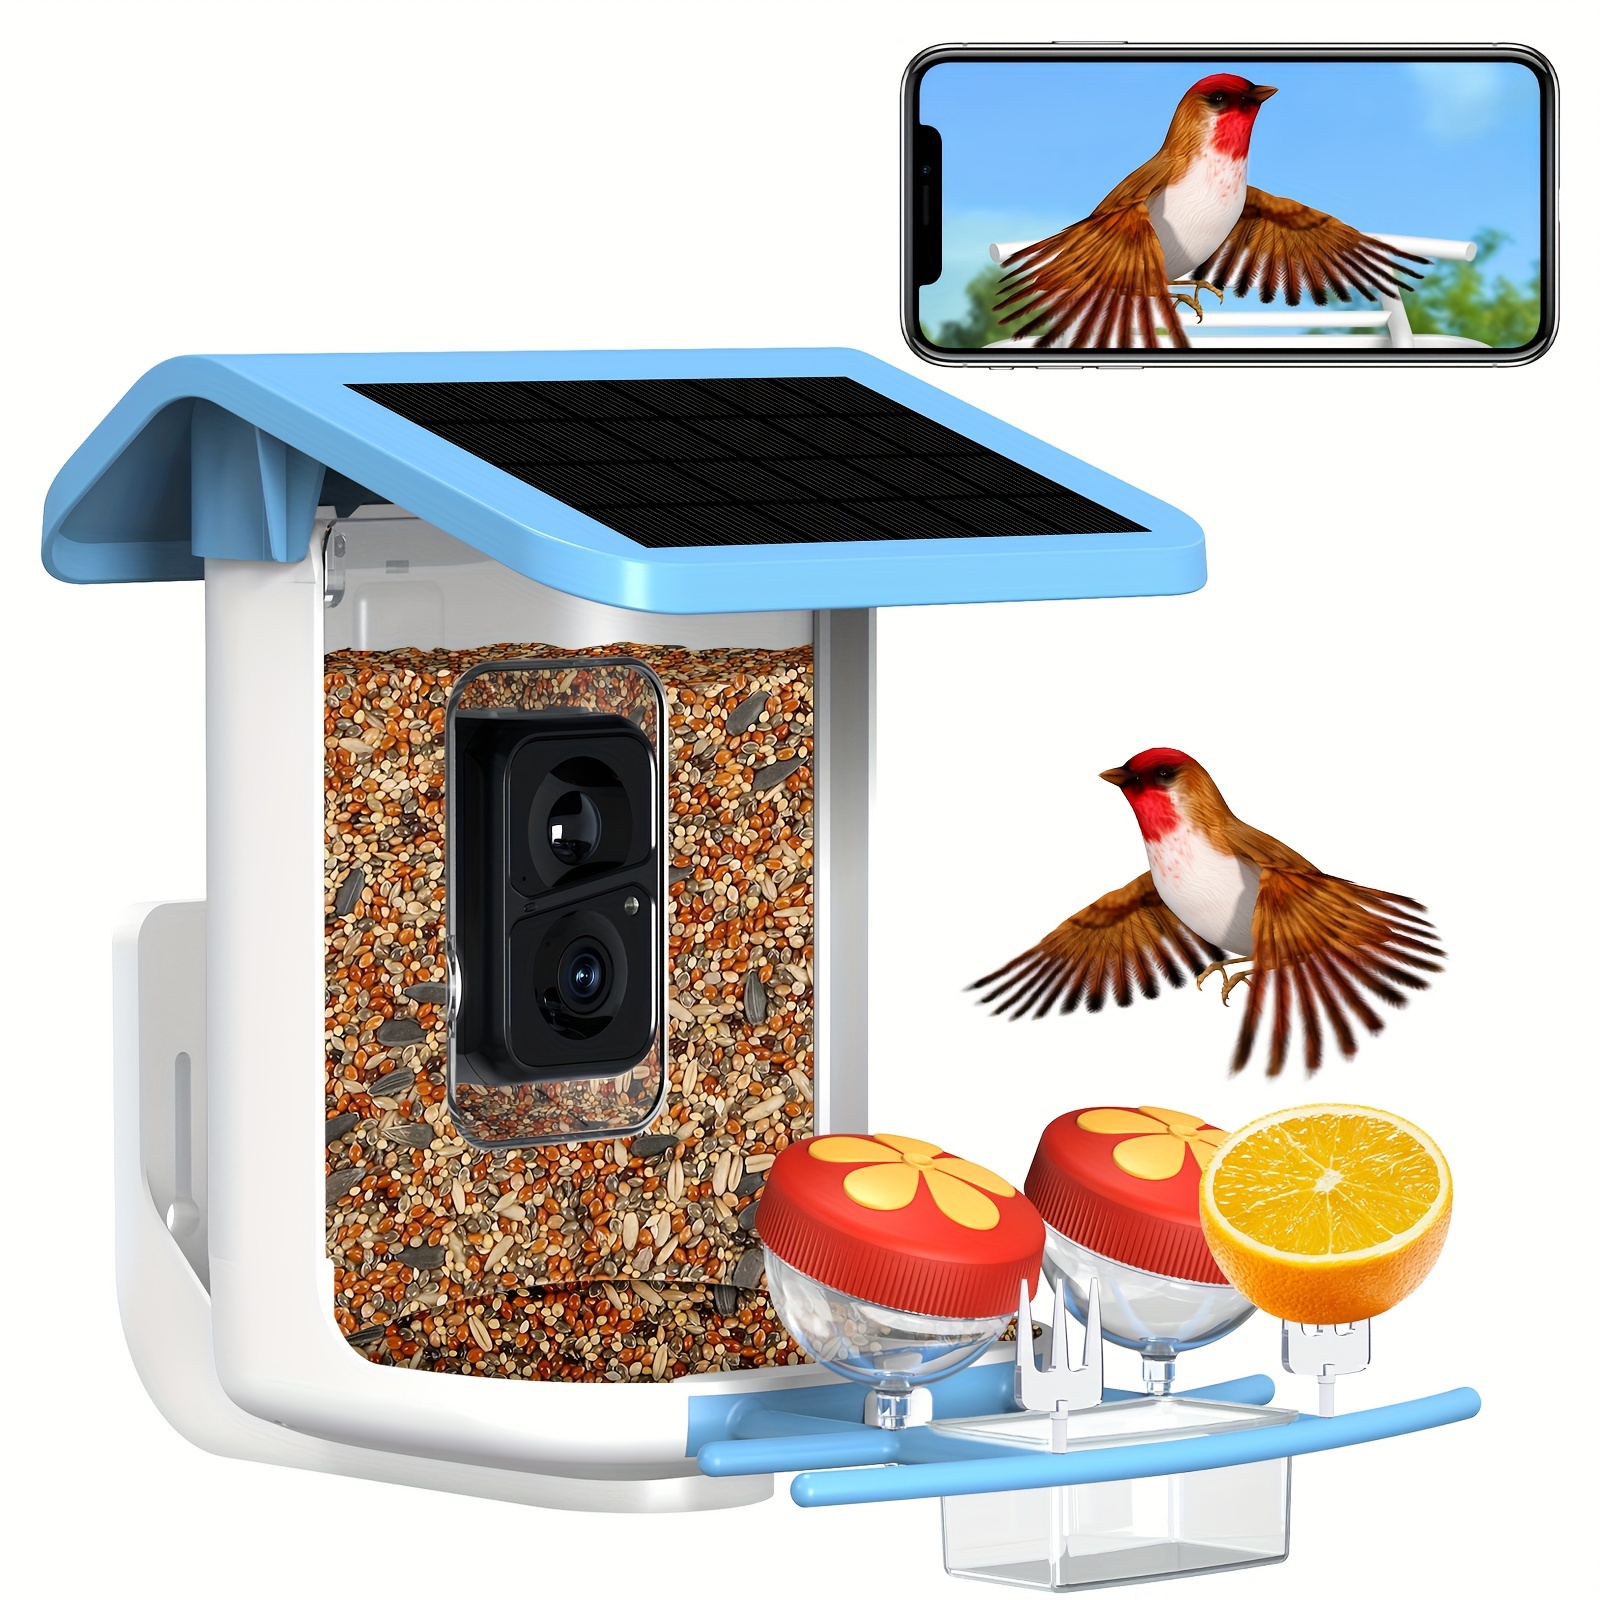 

Smart Bird Feeder With Camera, Ai Identify 11000+ Bird Species, Bird Watching Camera, Auto Capture Bird Videos & App Instant Notifications, Bird House With Built-in Two-way Microphone